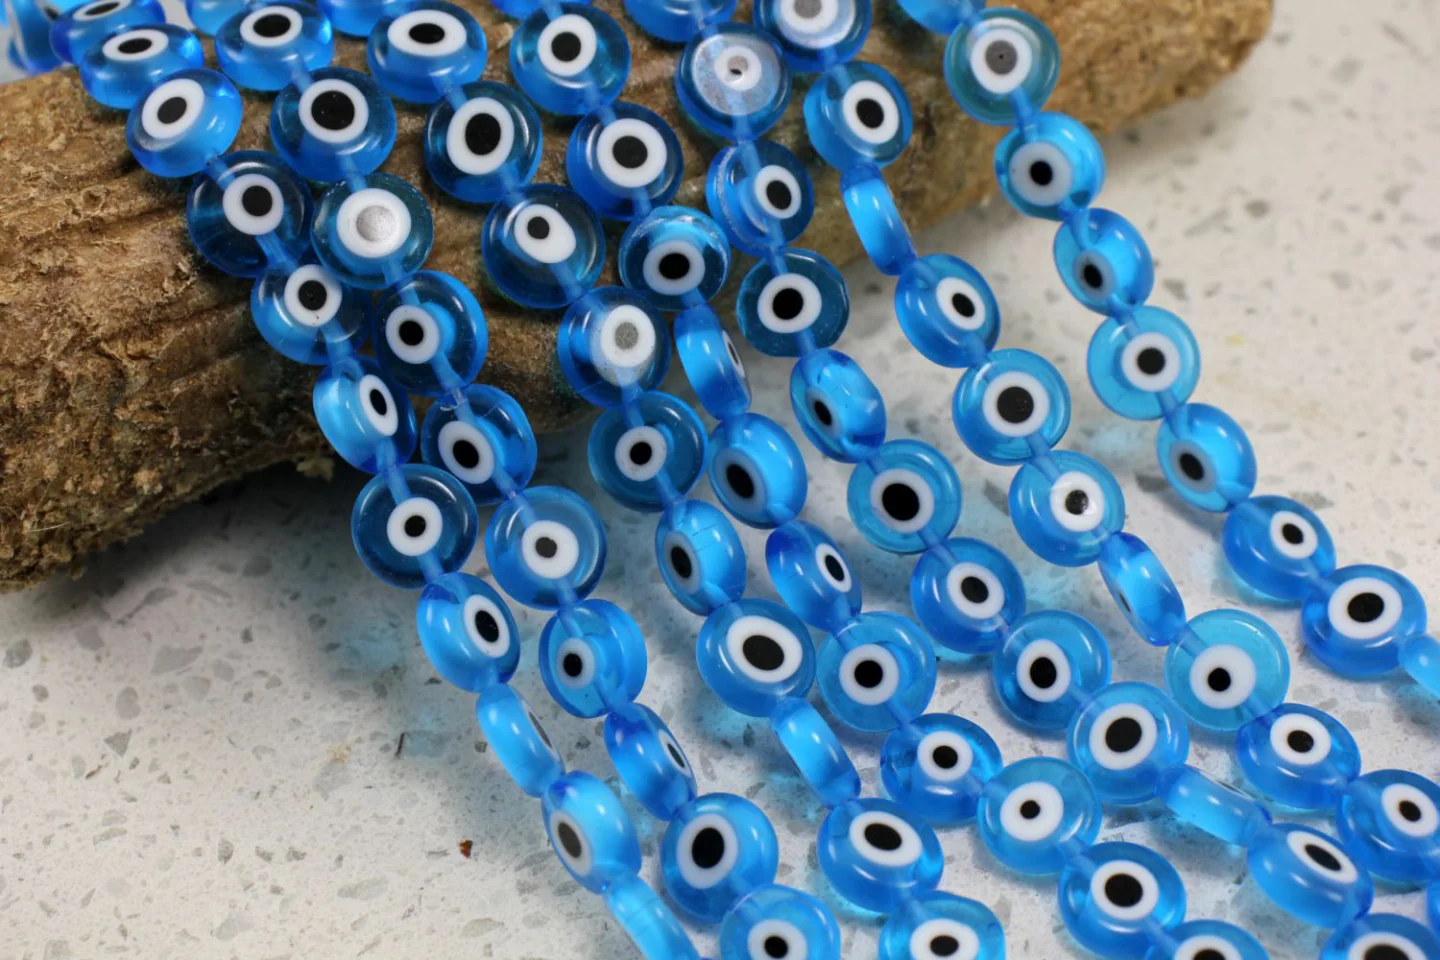 10mm-glass-evil-eye-glass-beads.